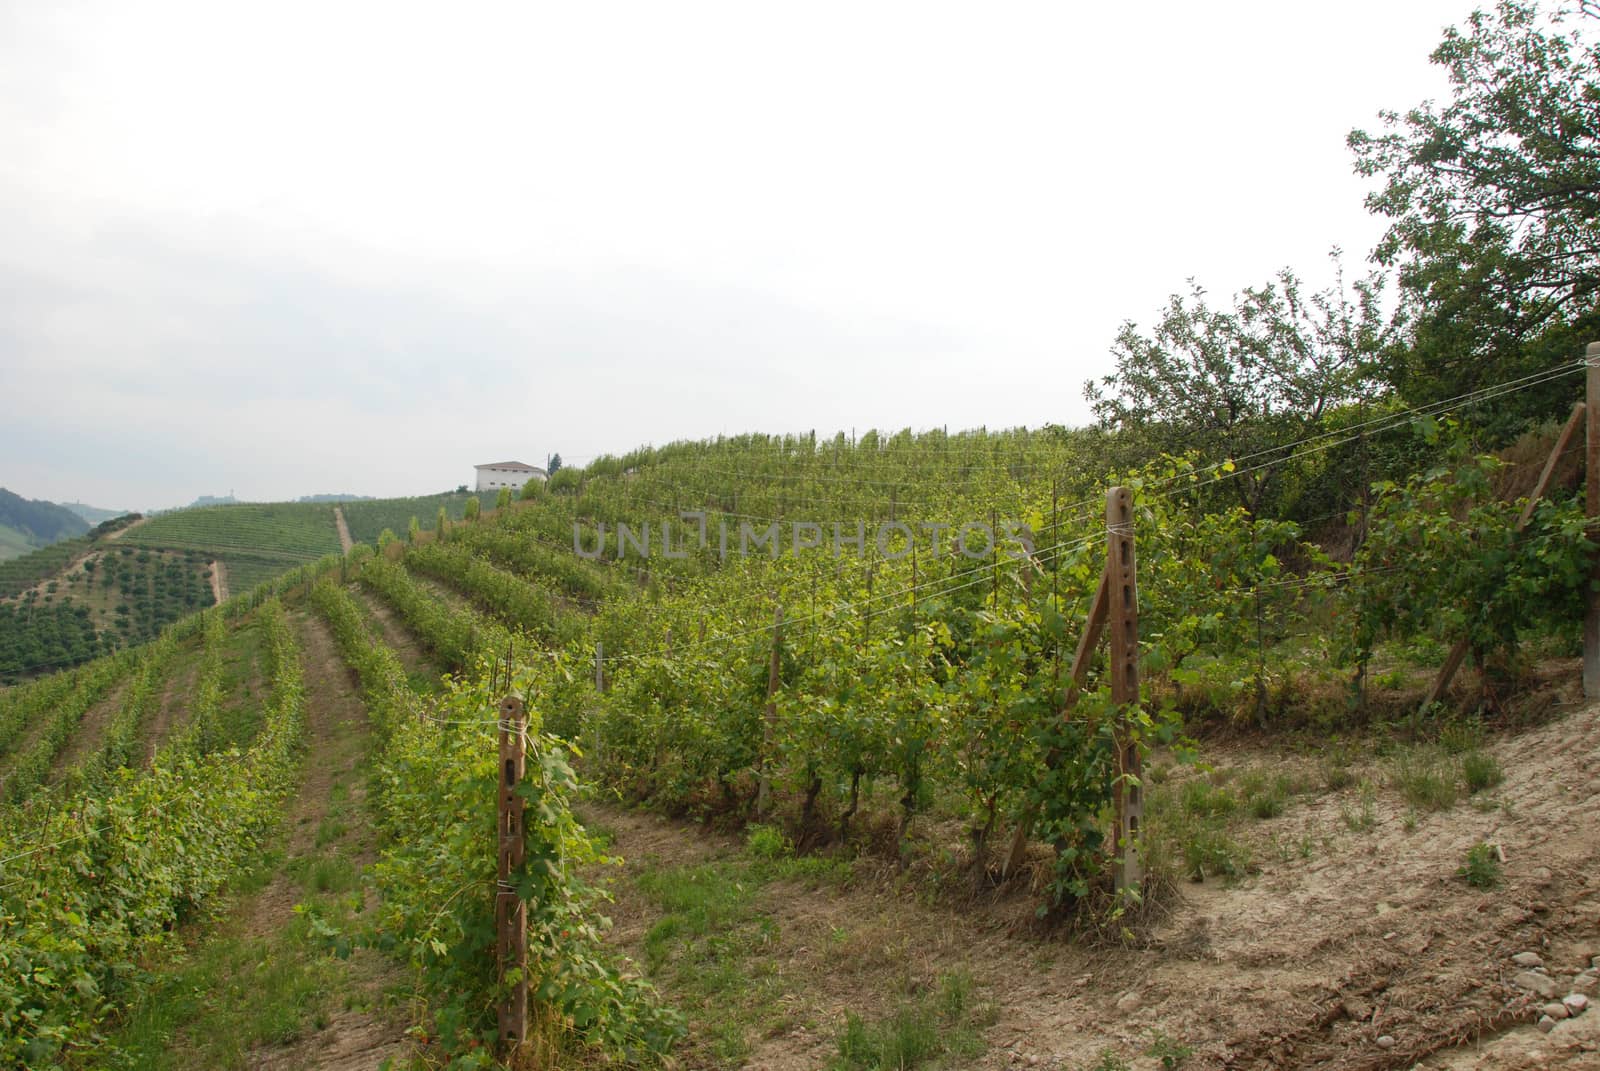 Vineyard on the hills of Barolo, Piedmont - Italy